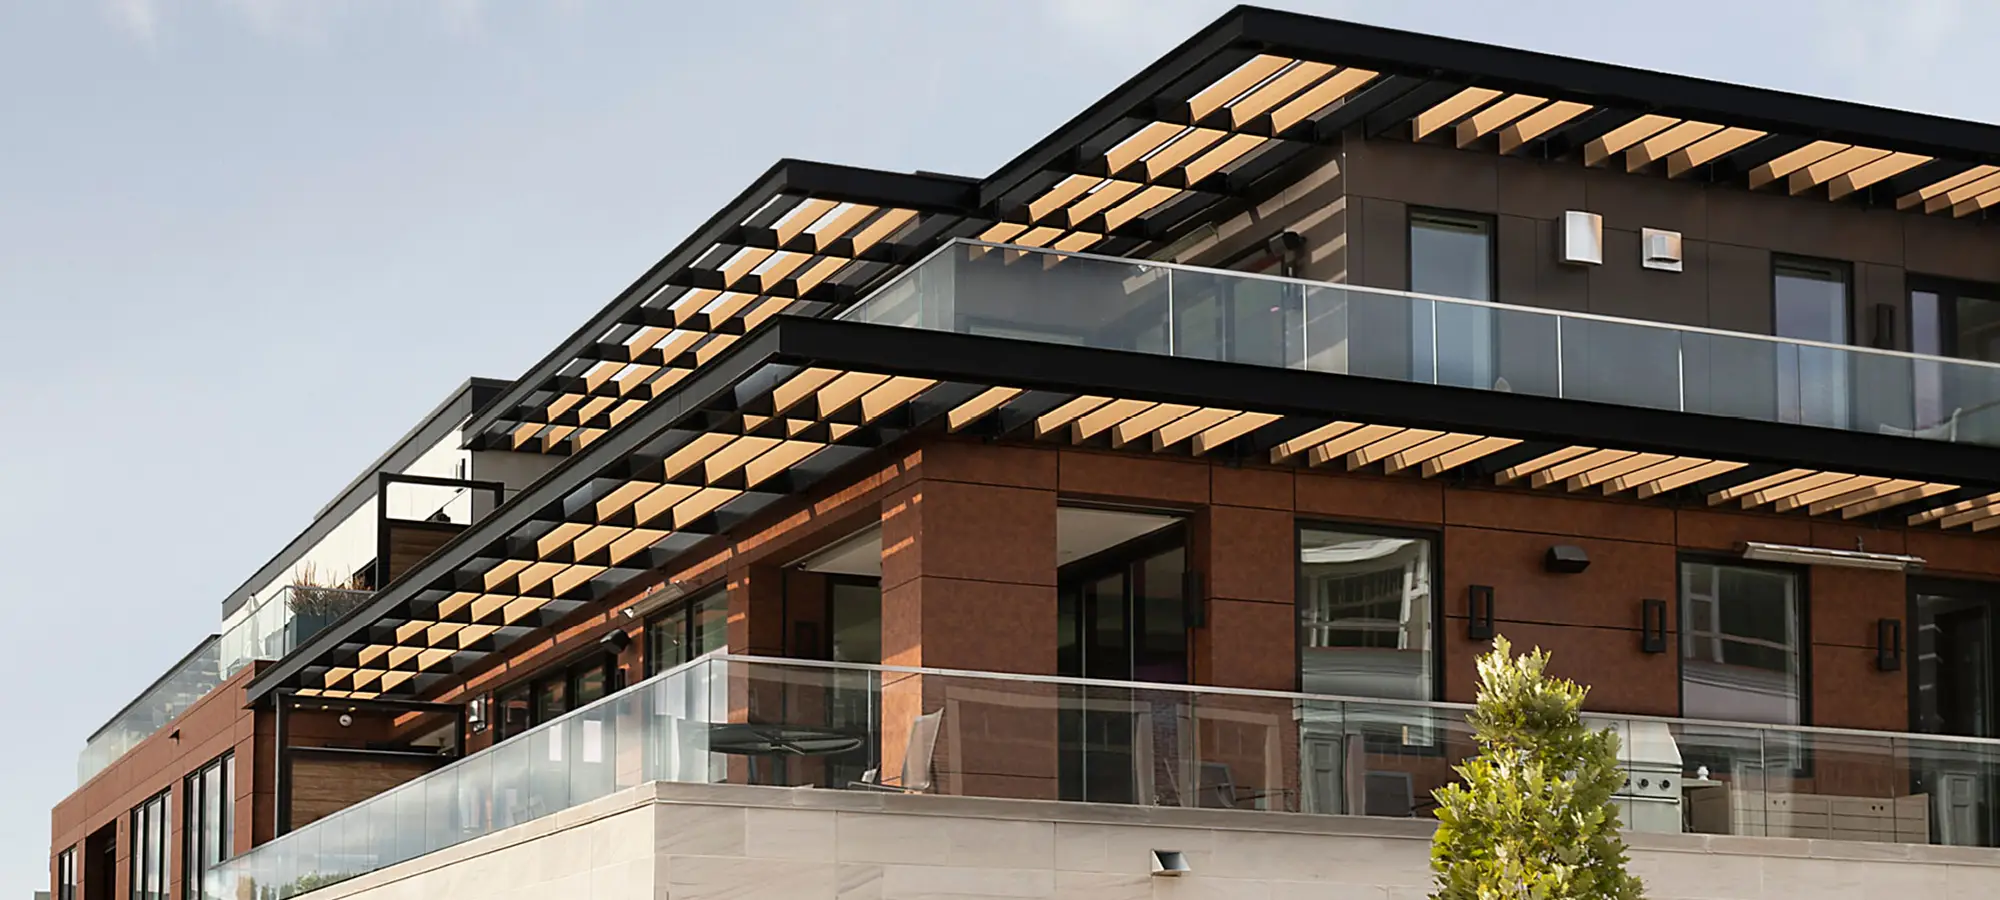 Geolam® Wood-Plastic Composite Architectural Elements